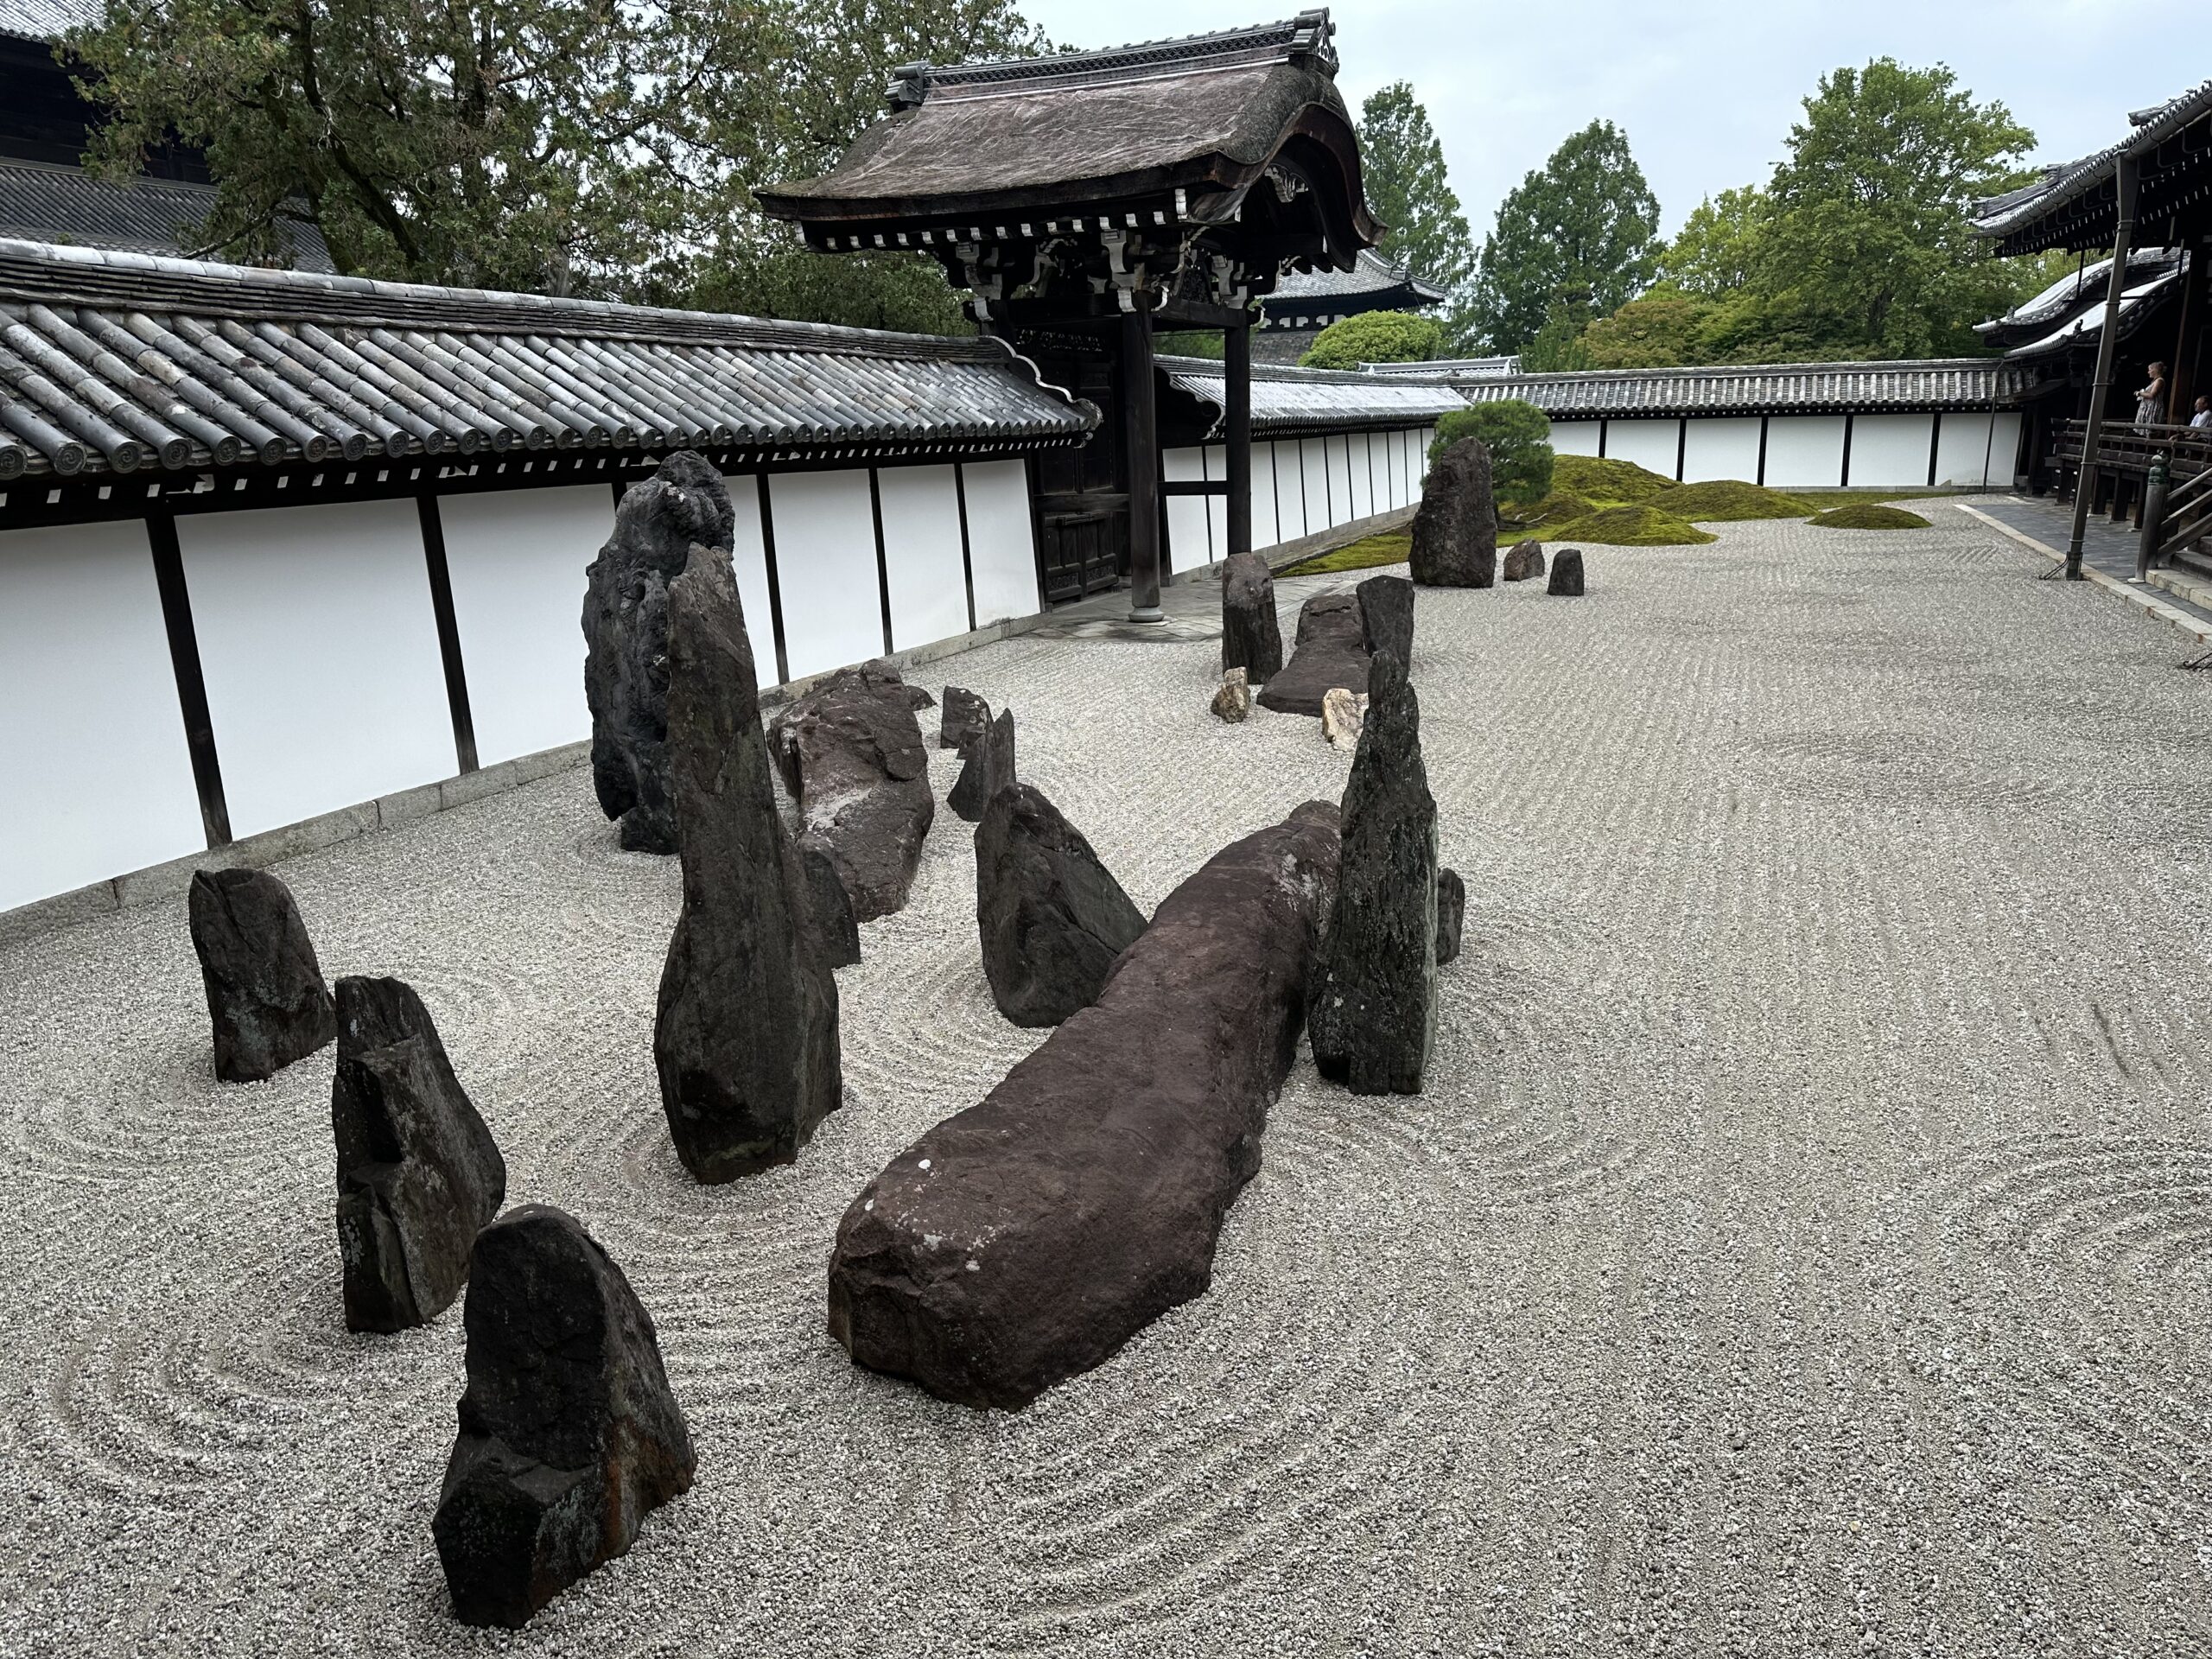 Part of the Zen garden within Tōfuku-Ji temple.